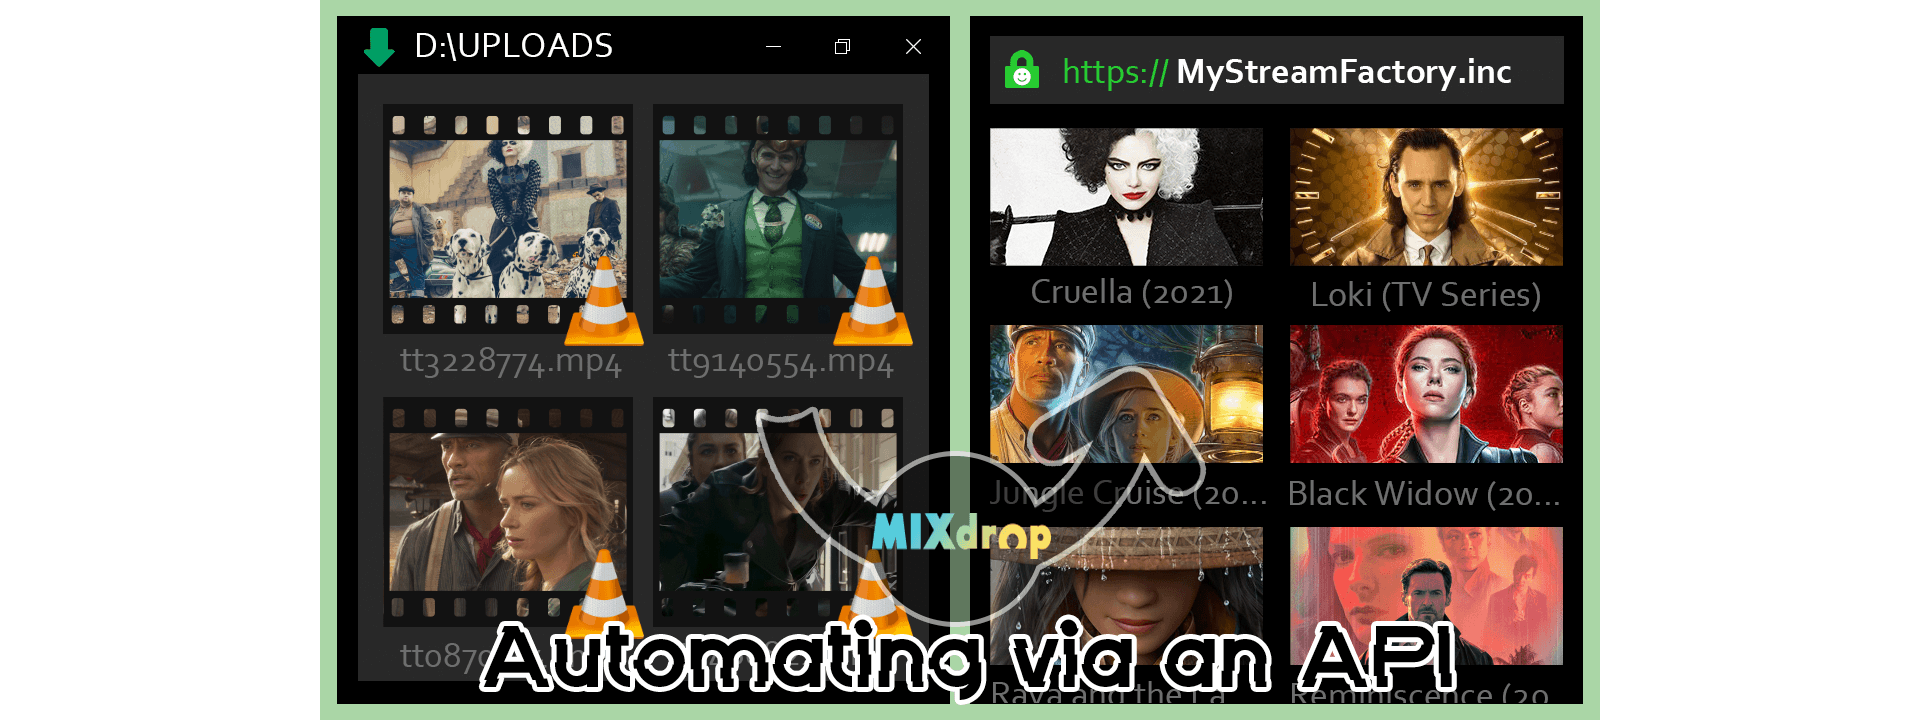 Movie/TV Streaming Website via an API MIXDROP